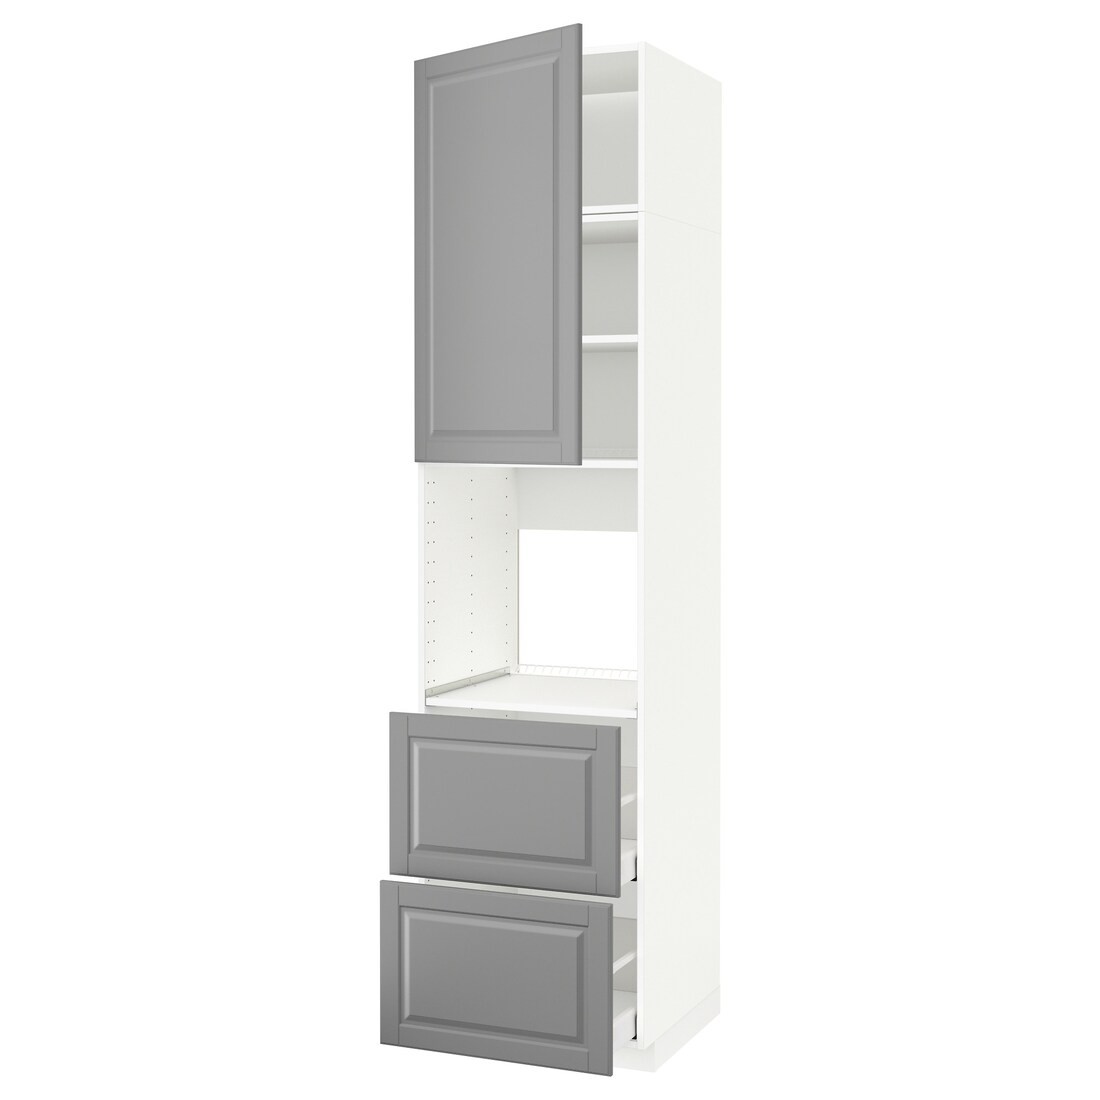 IKEA METOD МЕТОД / MAXIMERA МАКСИМЕРА Высокий шкаф для духовки, белый / Bodbyn серый, 60x60x240 см 89468424 | 894.684.24